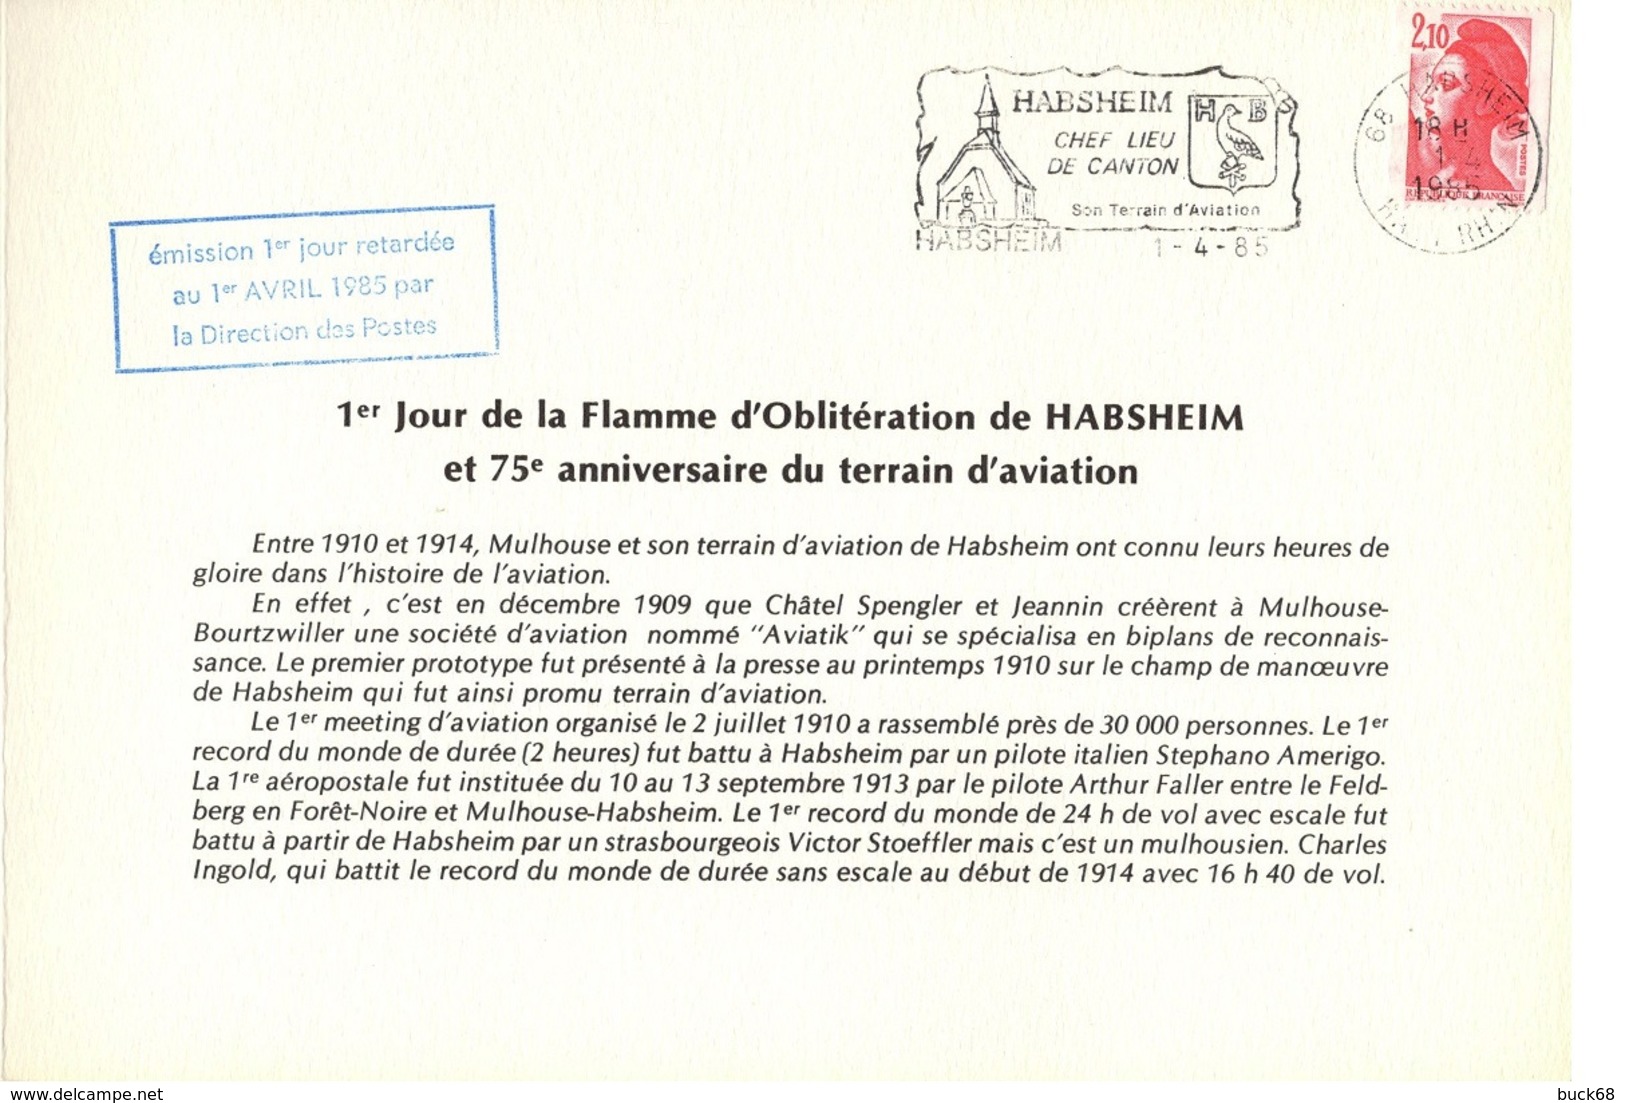 FRANCE 1985 Document Philatélique HABSHEIM Aviatik Pionniers Spengler Jeannin Biplan Reconnaissance 1910 (500 Ex) [GR] - Other (Air)